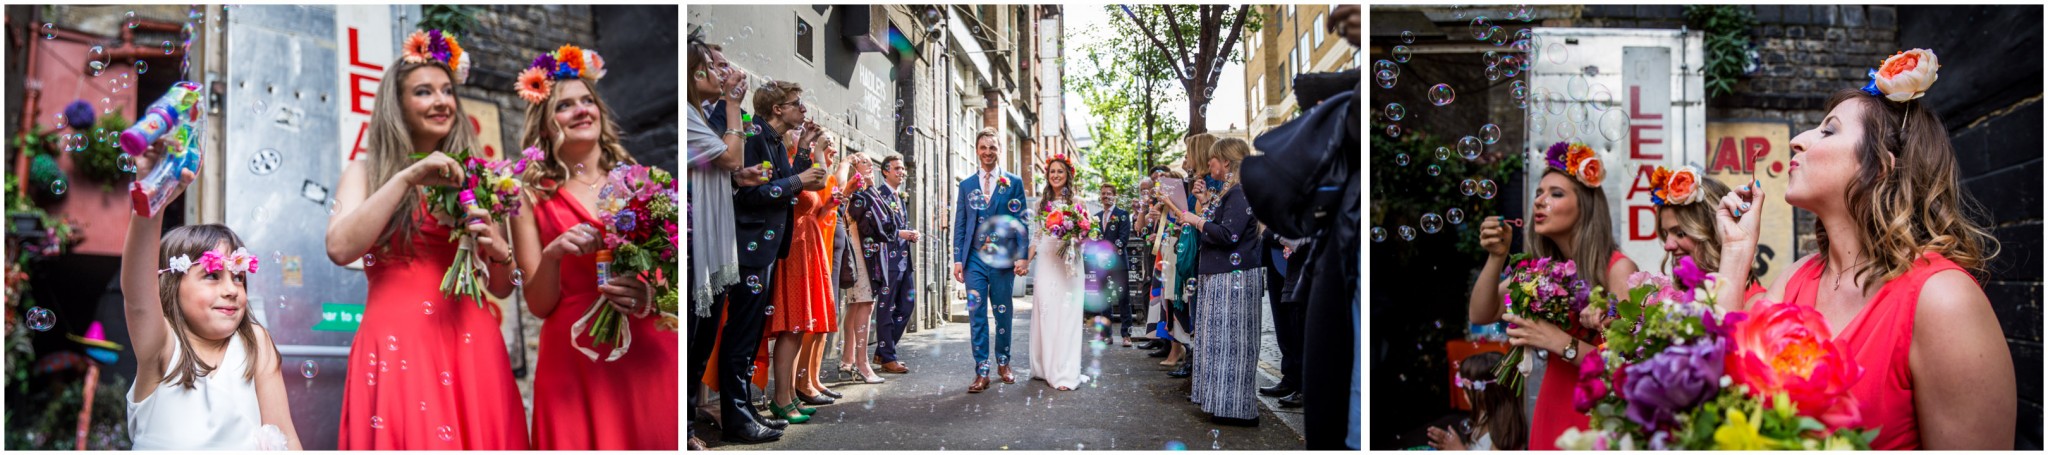 Islington Metal Works Wedding - Tunnel of Bubbles